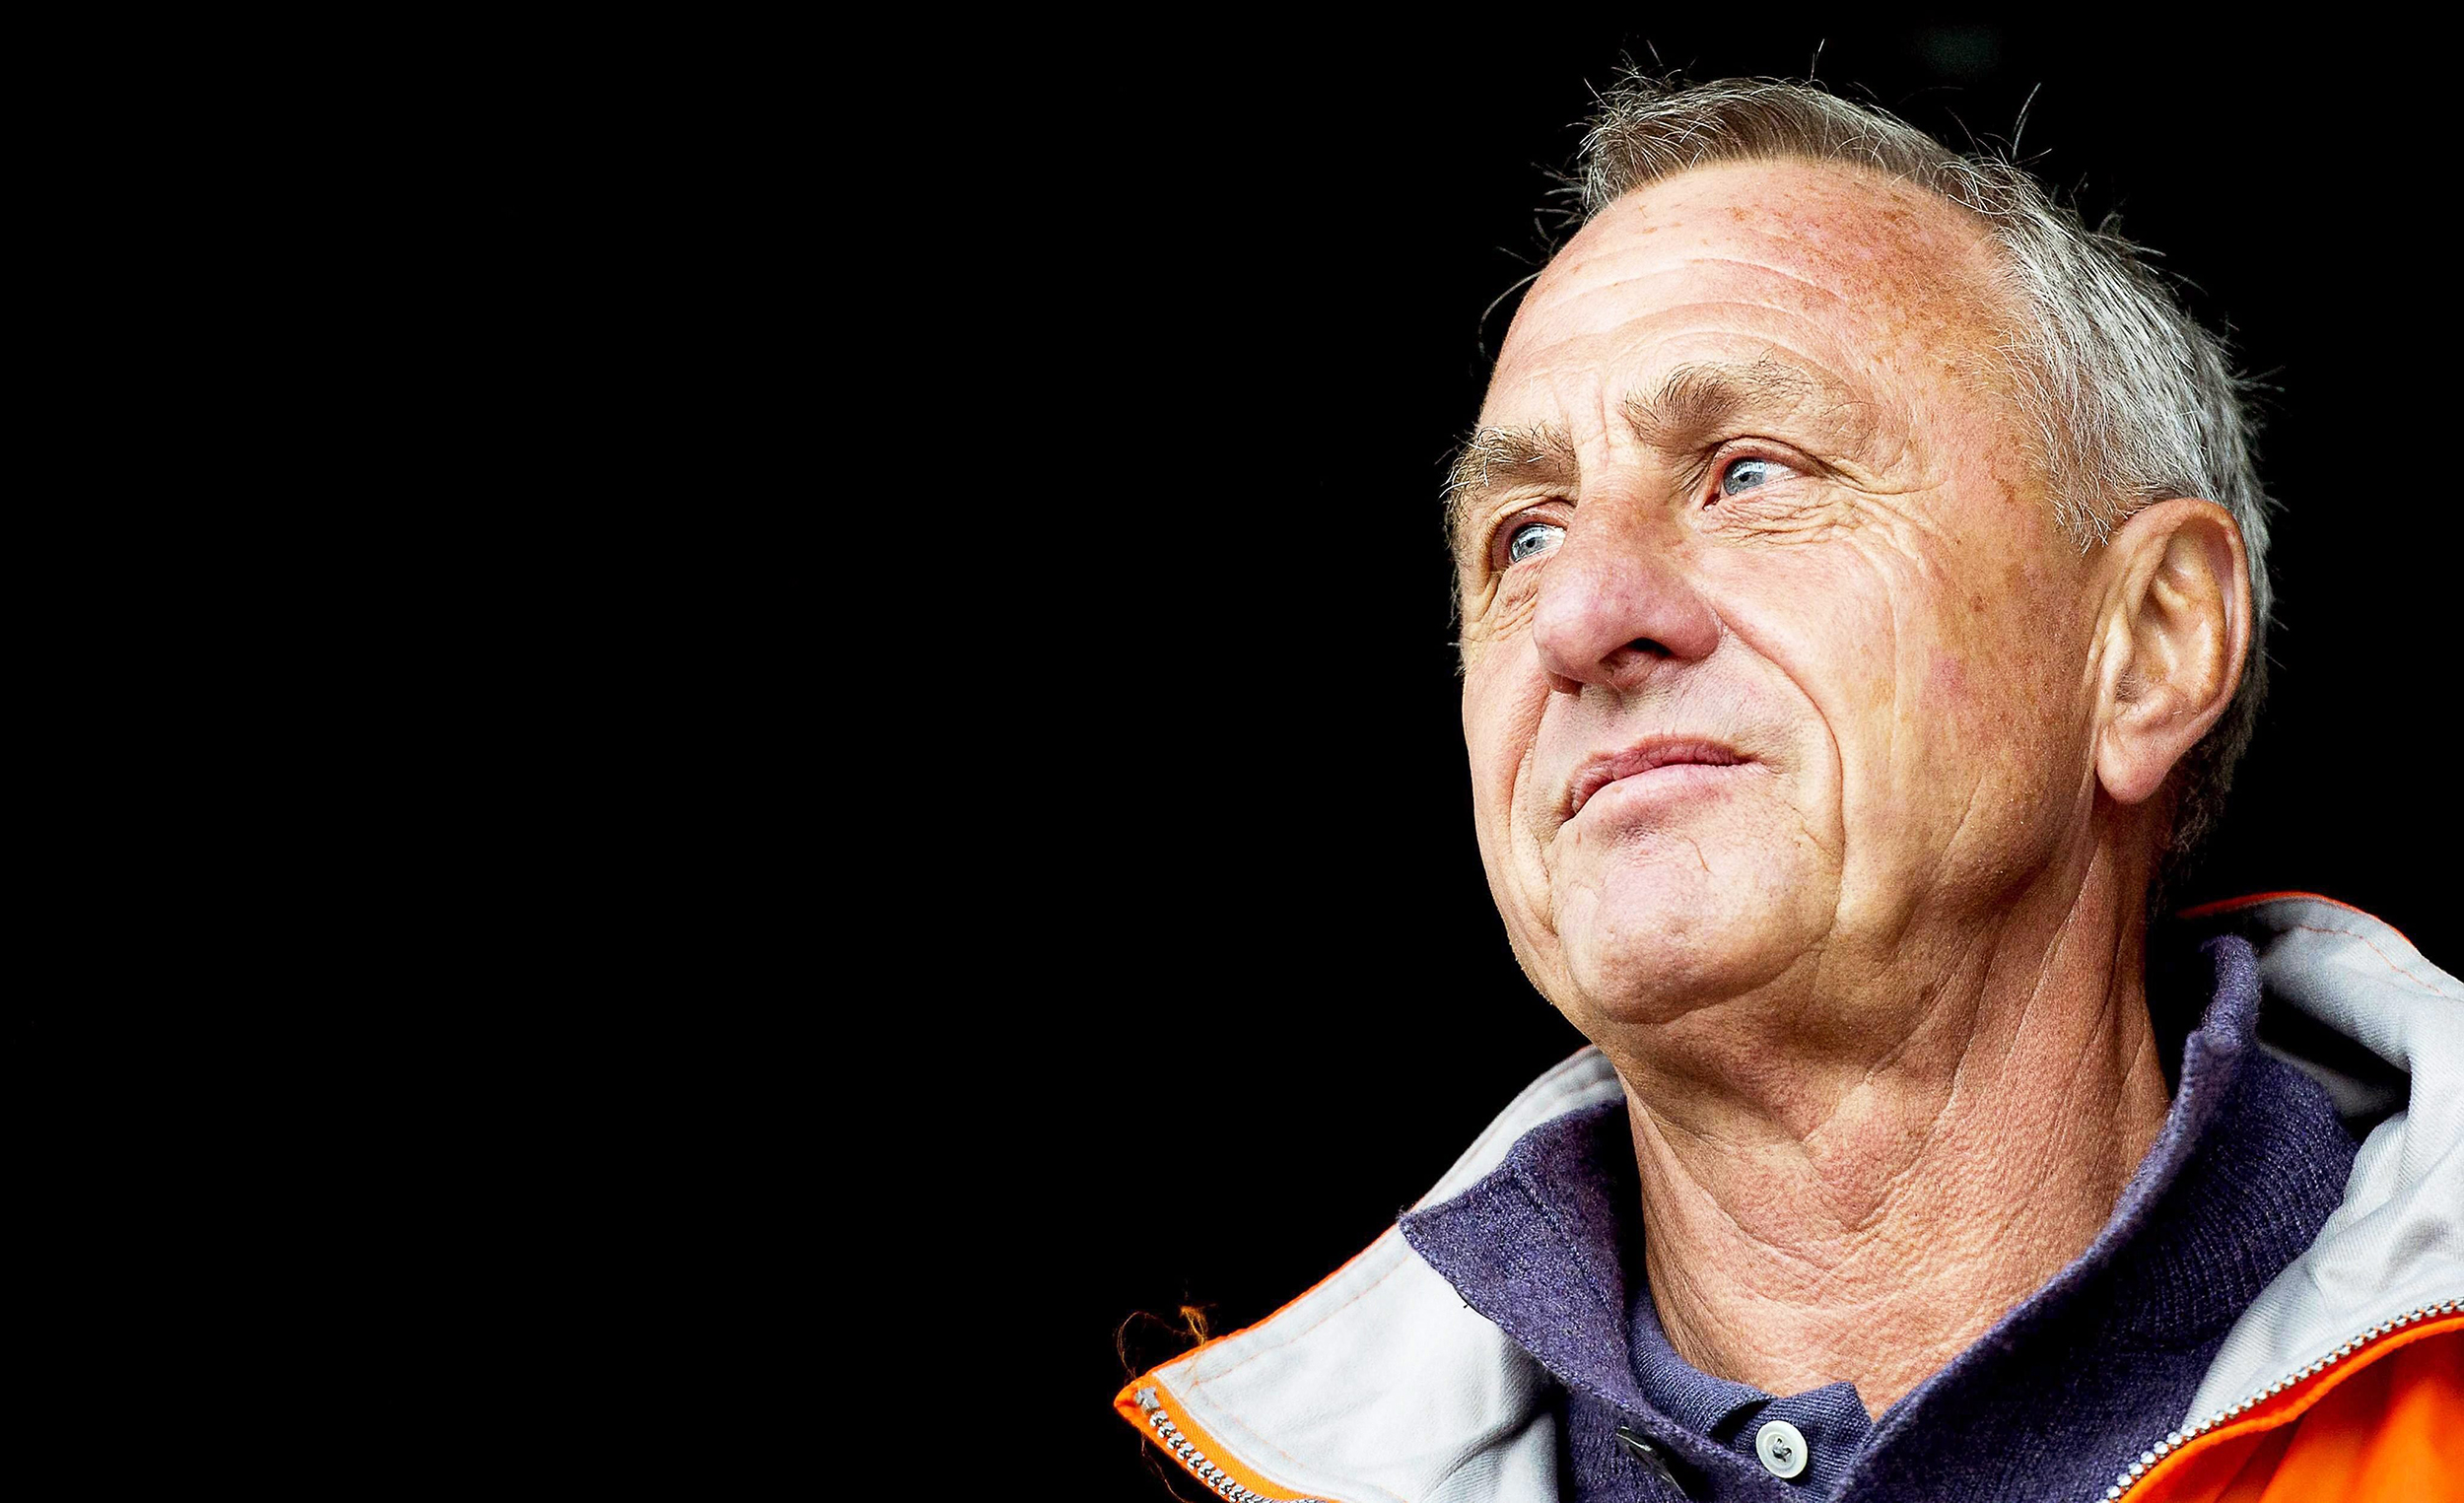 Dutch soccer legend, Johan Cruyff attending the Cruyff Court Final soccer tournament in Amsterdam, Netherlands on May 18, 2013. (Koen Van Weel—EPA)